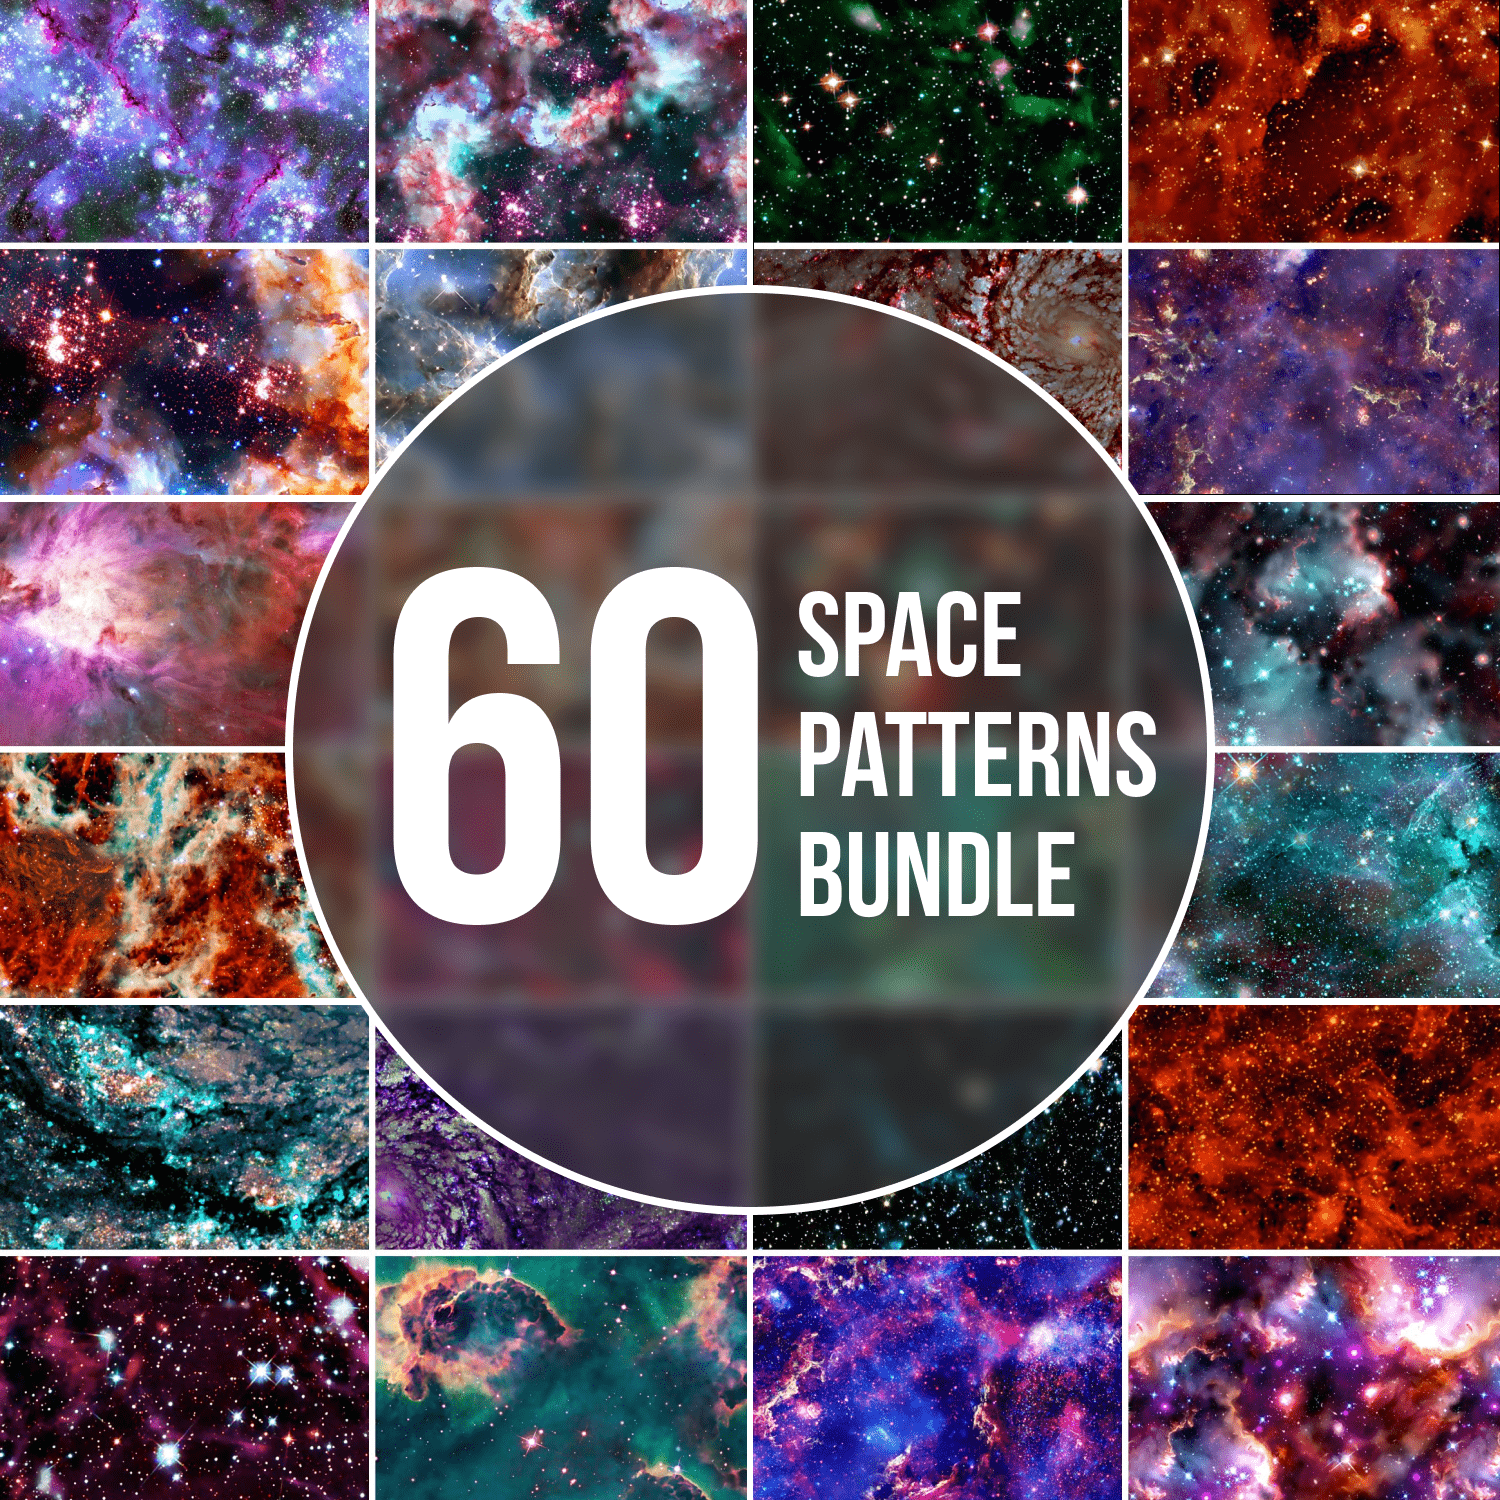 60 Space Patterns Bundle.